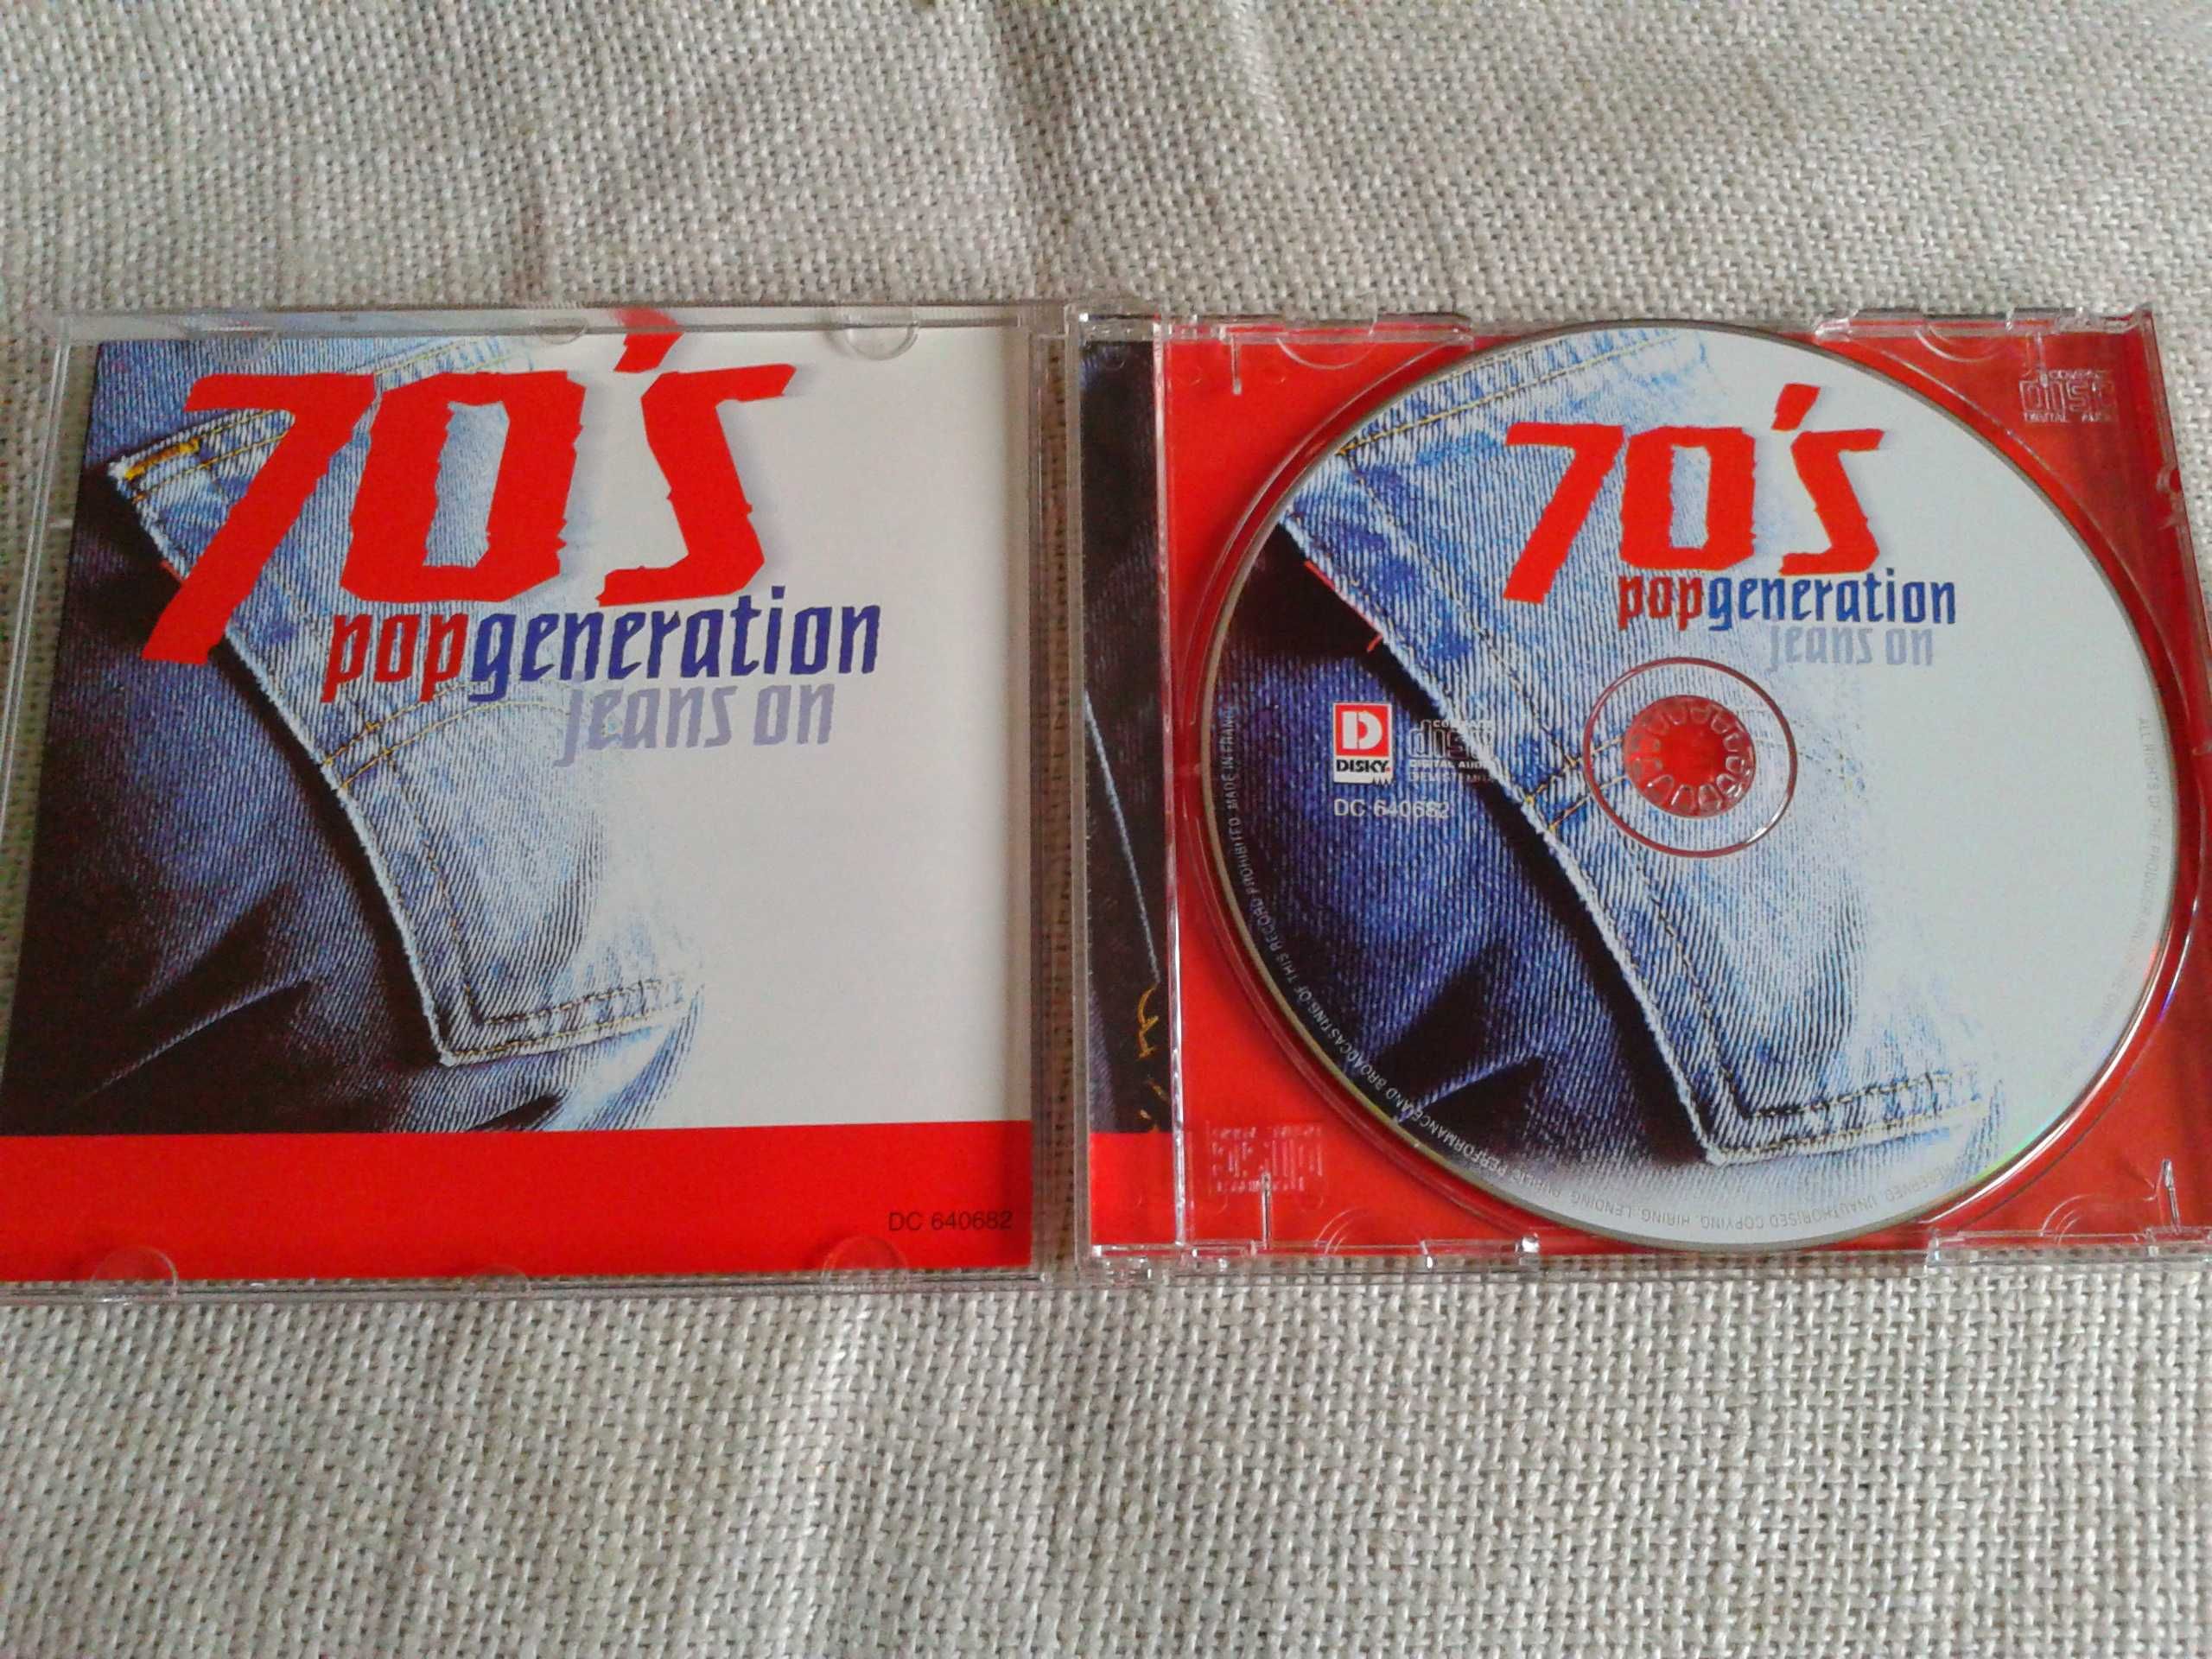 70's Pop Generation - Jeans on  CD